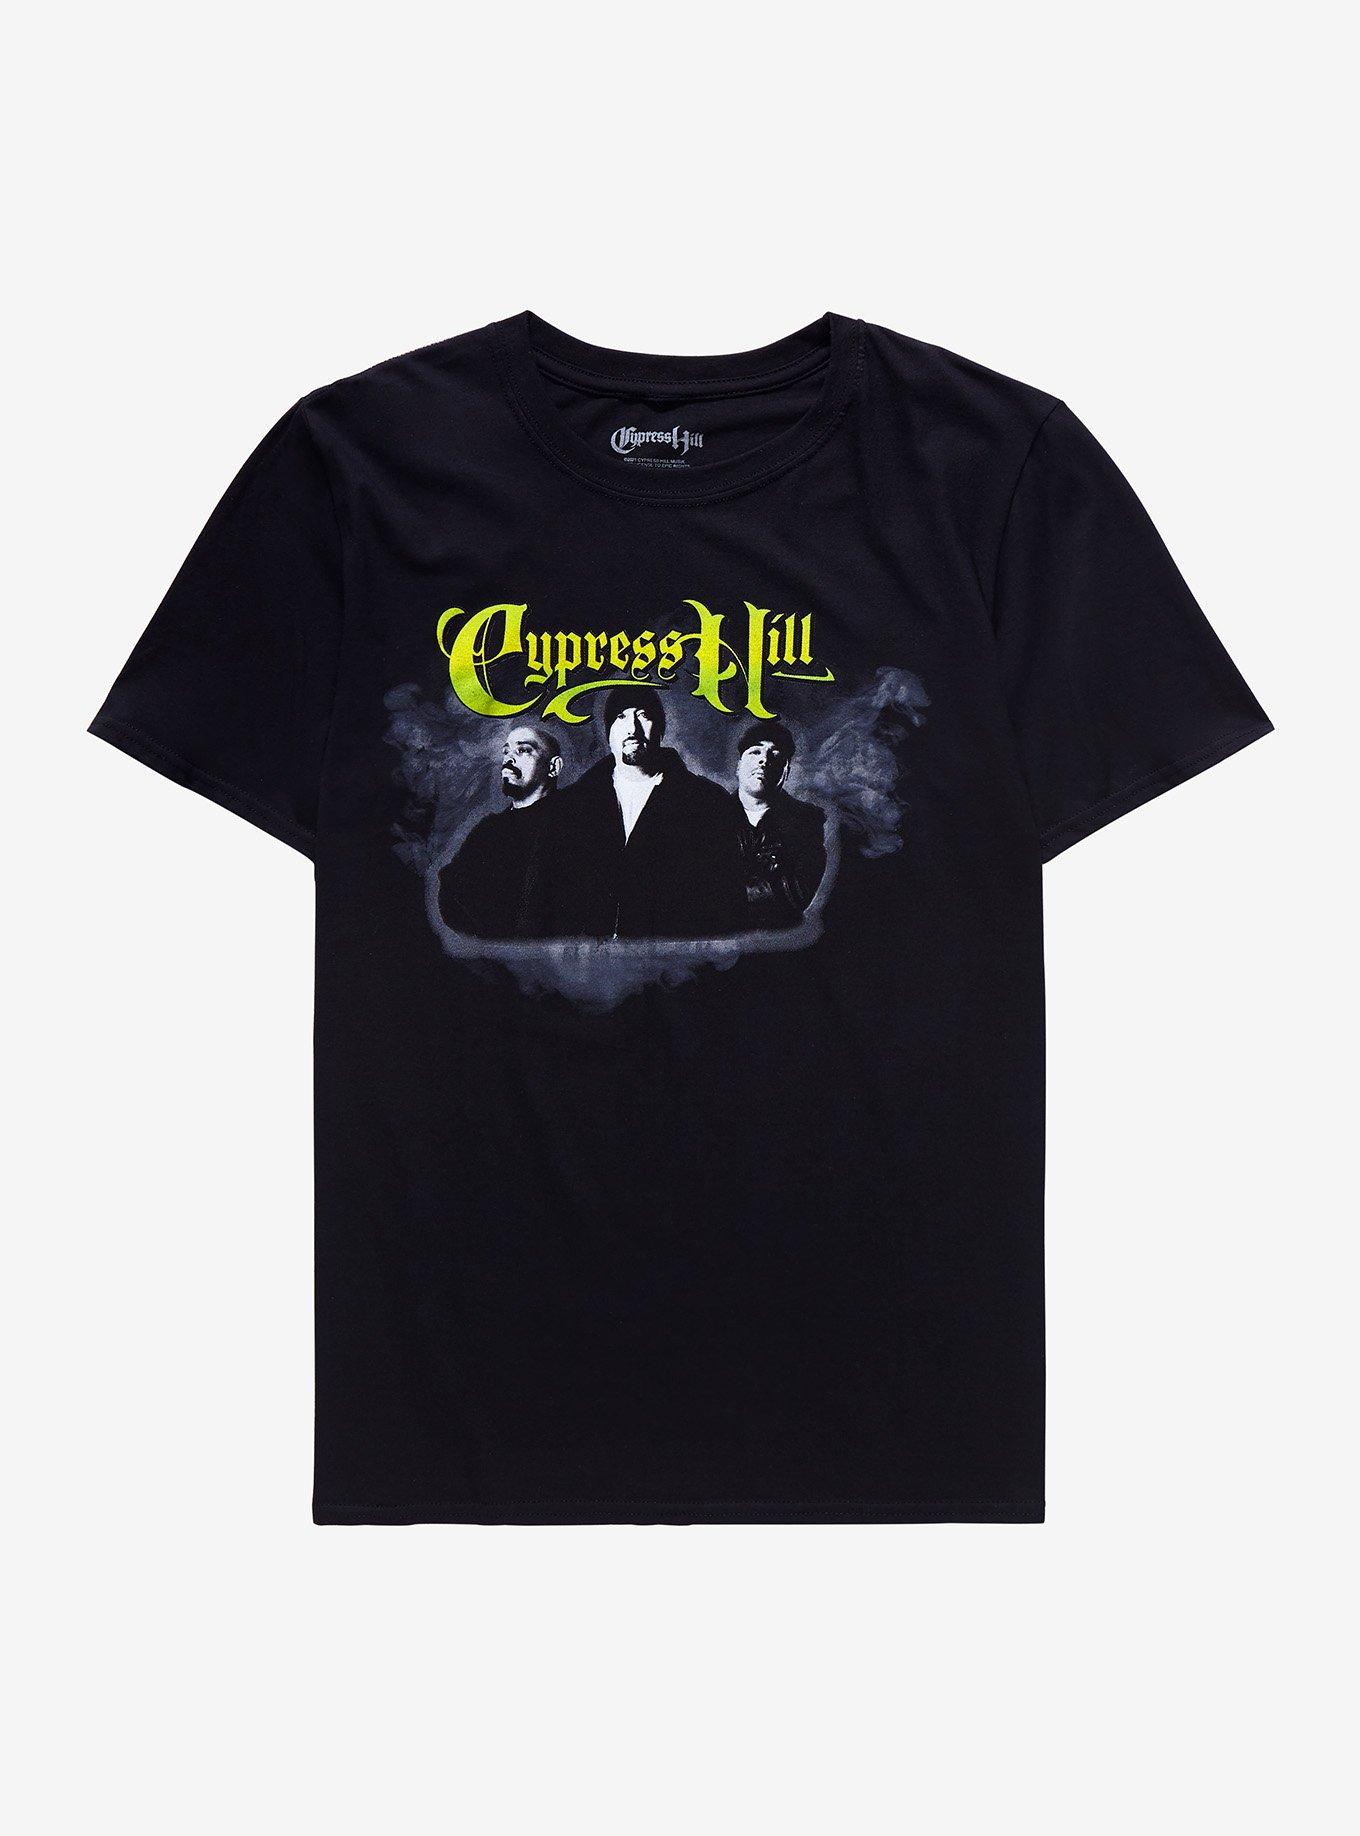 Cypress Hill Group Portrait T-Shirt, BLACK, hi-res